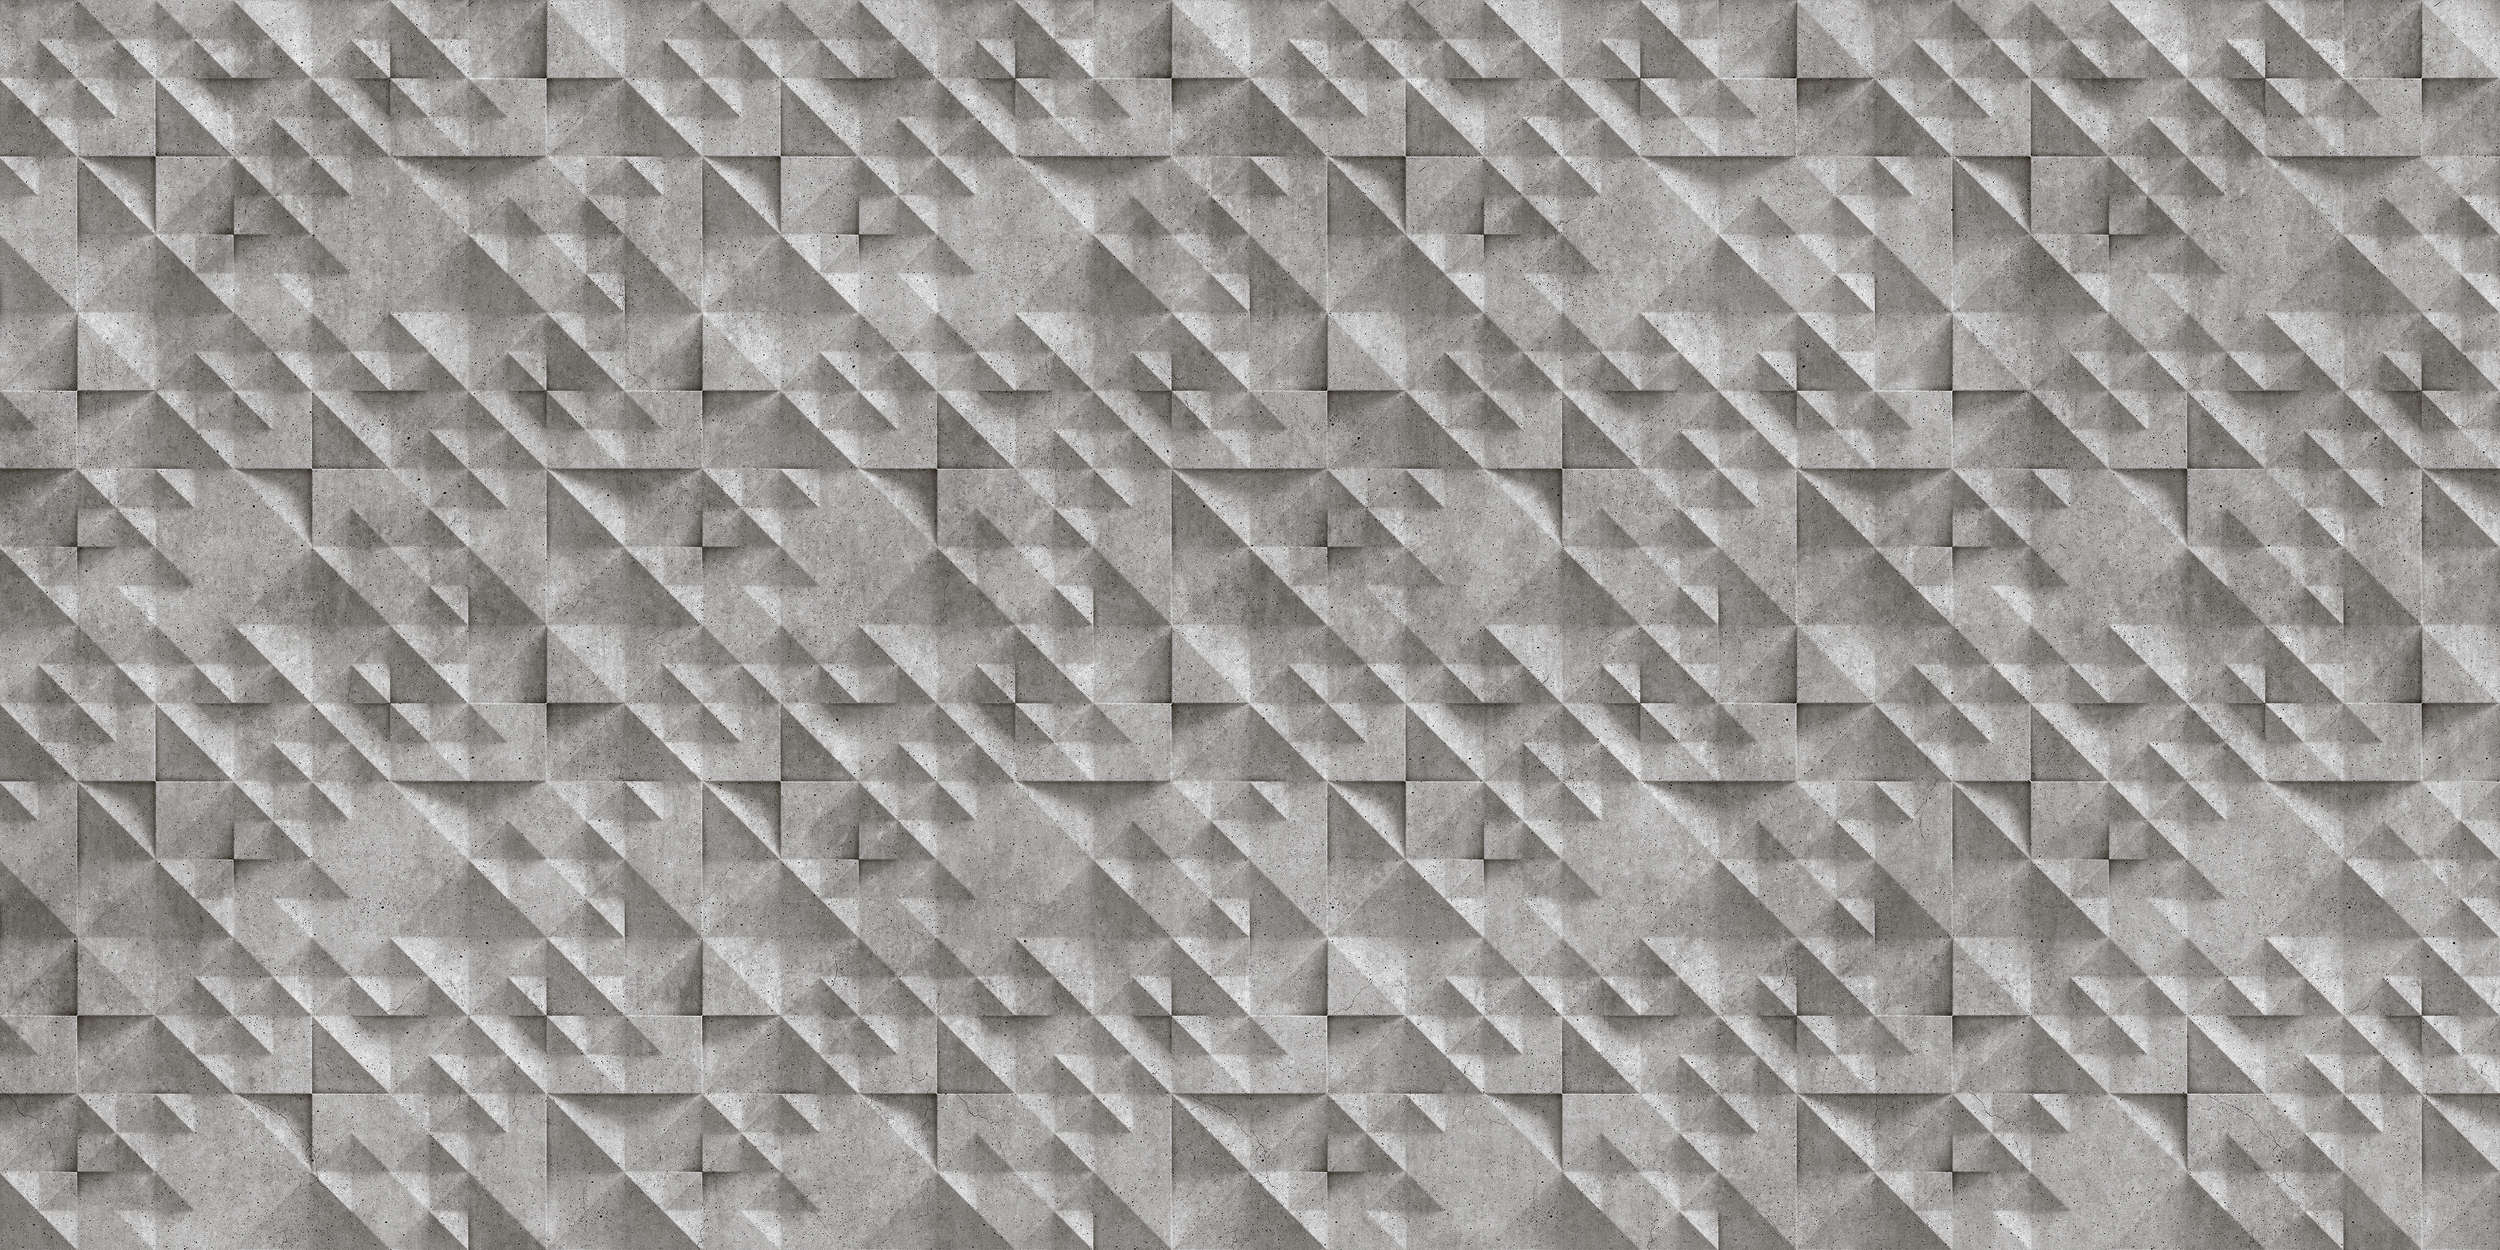             Concrete 2 - Coole 3D Beton-Rauten Fototapete – Grau, Schwarz | Struktur Vlies
        